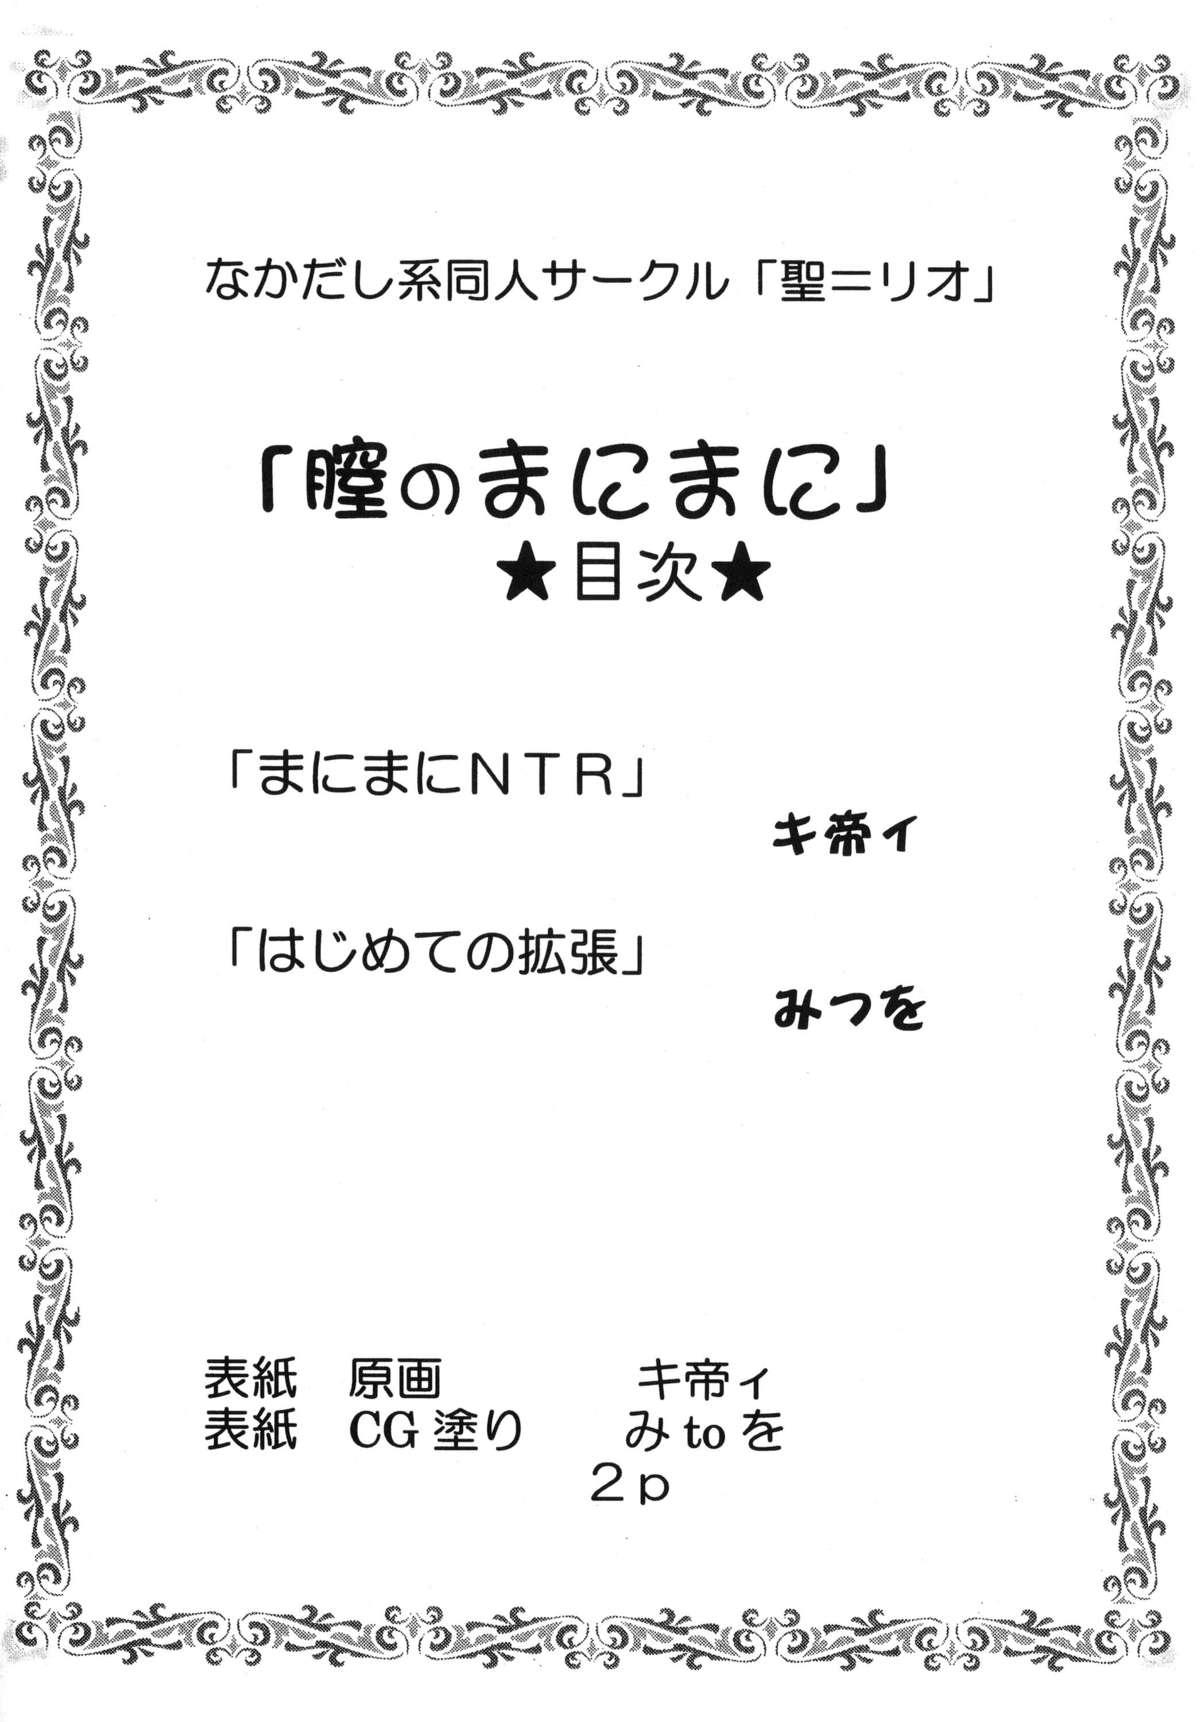 Candid Chitsu no Manimani - Sora no manimani Blond - Page 4